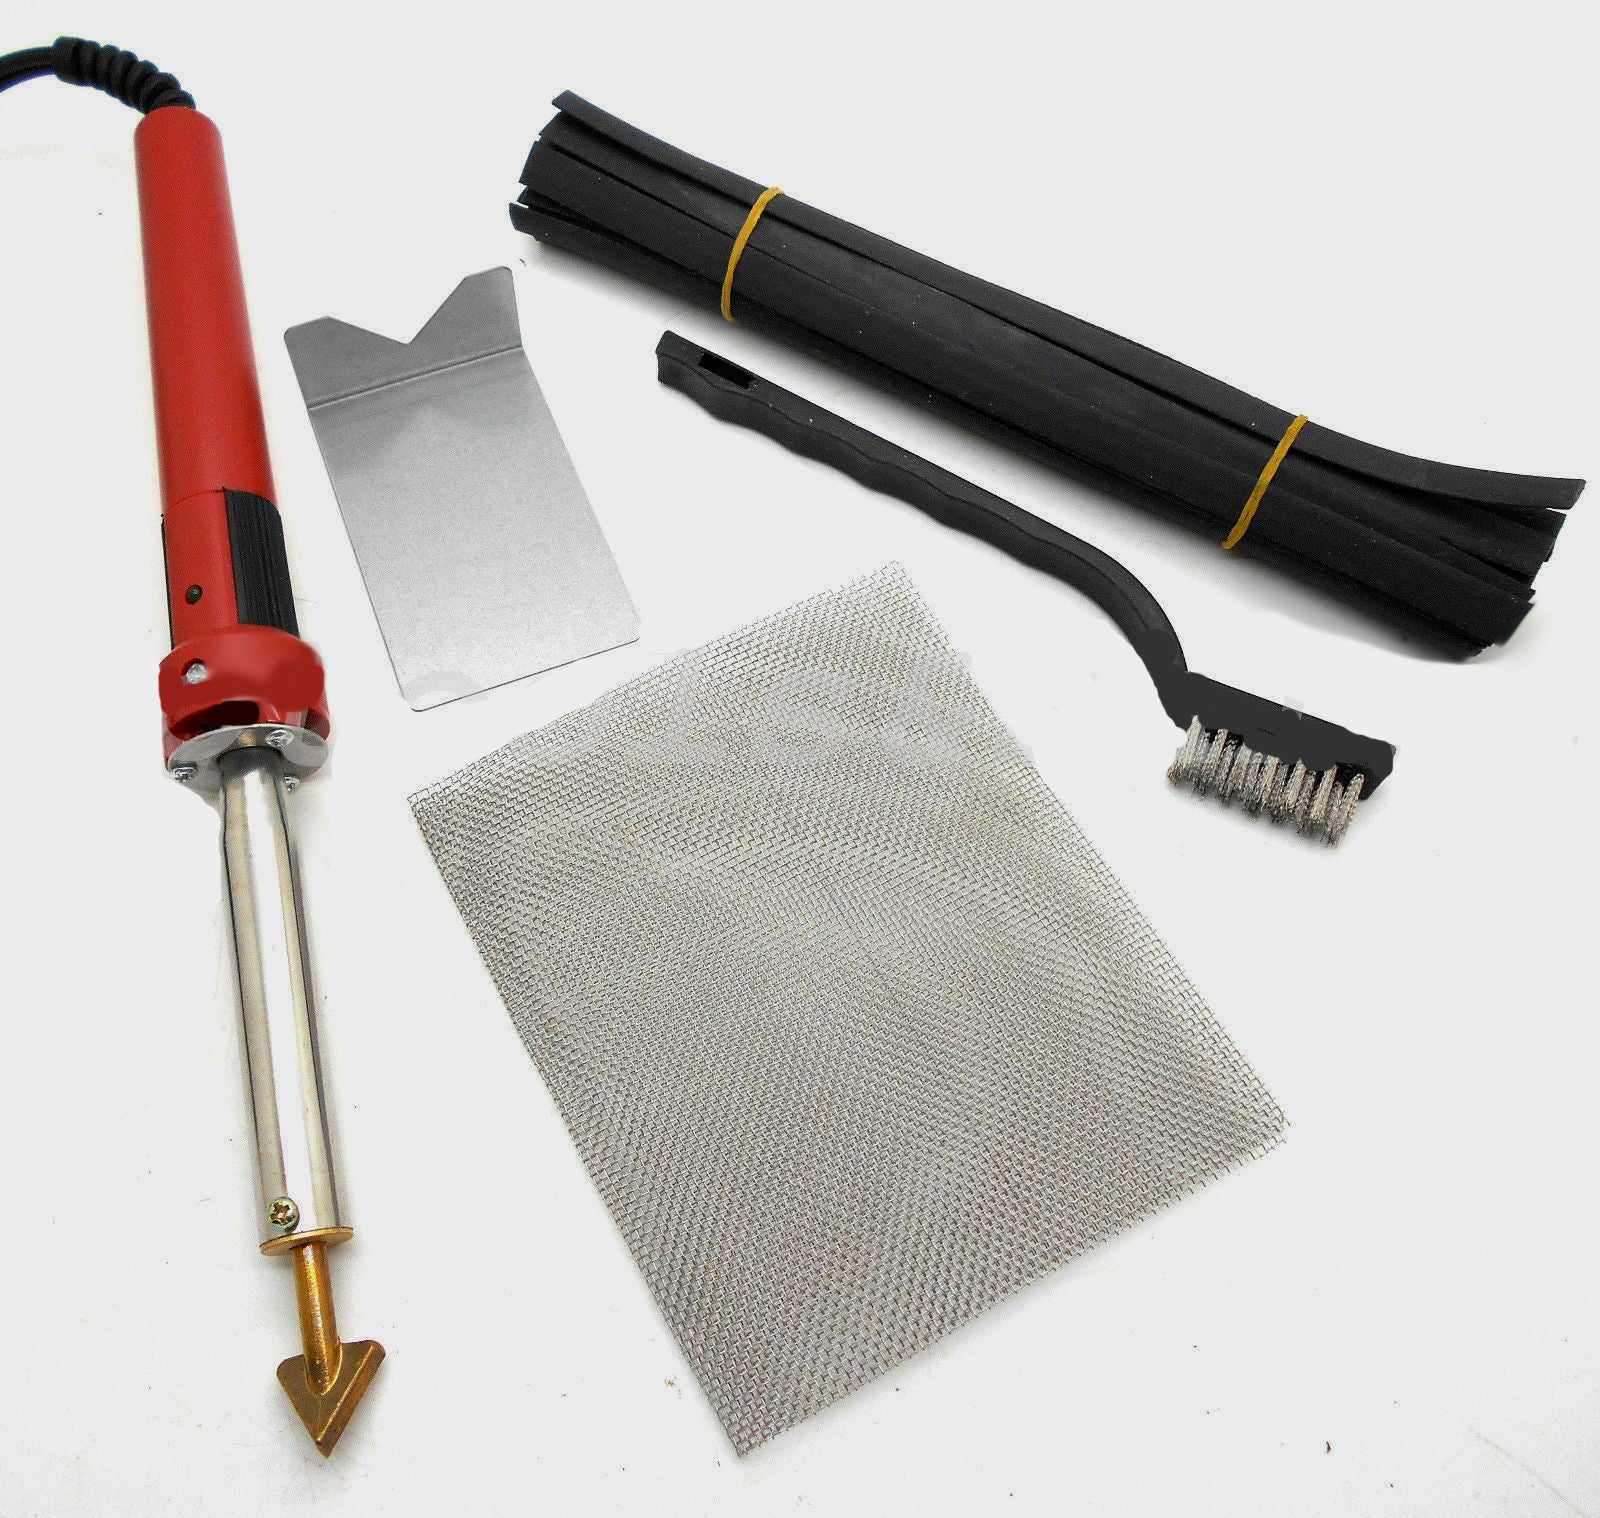 OVERSTOCK SALE! Pro-Tack Plastic Welder Complete Kit - Includes